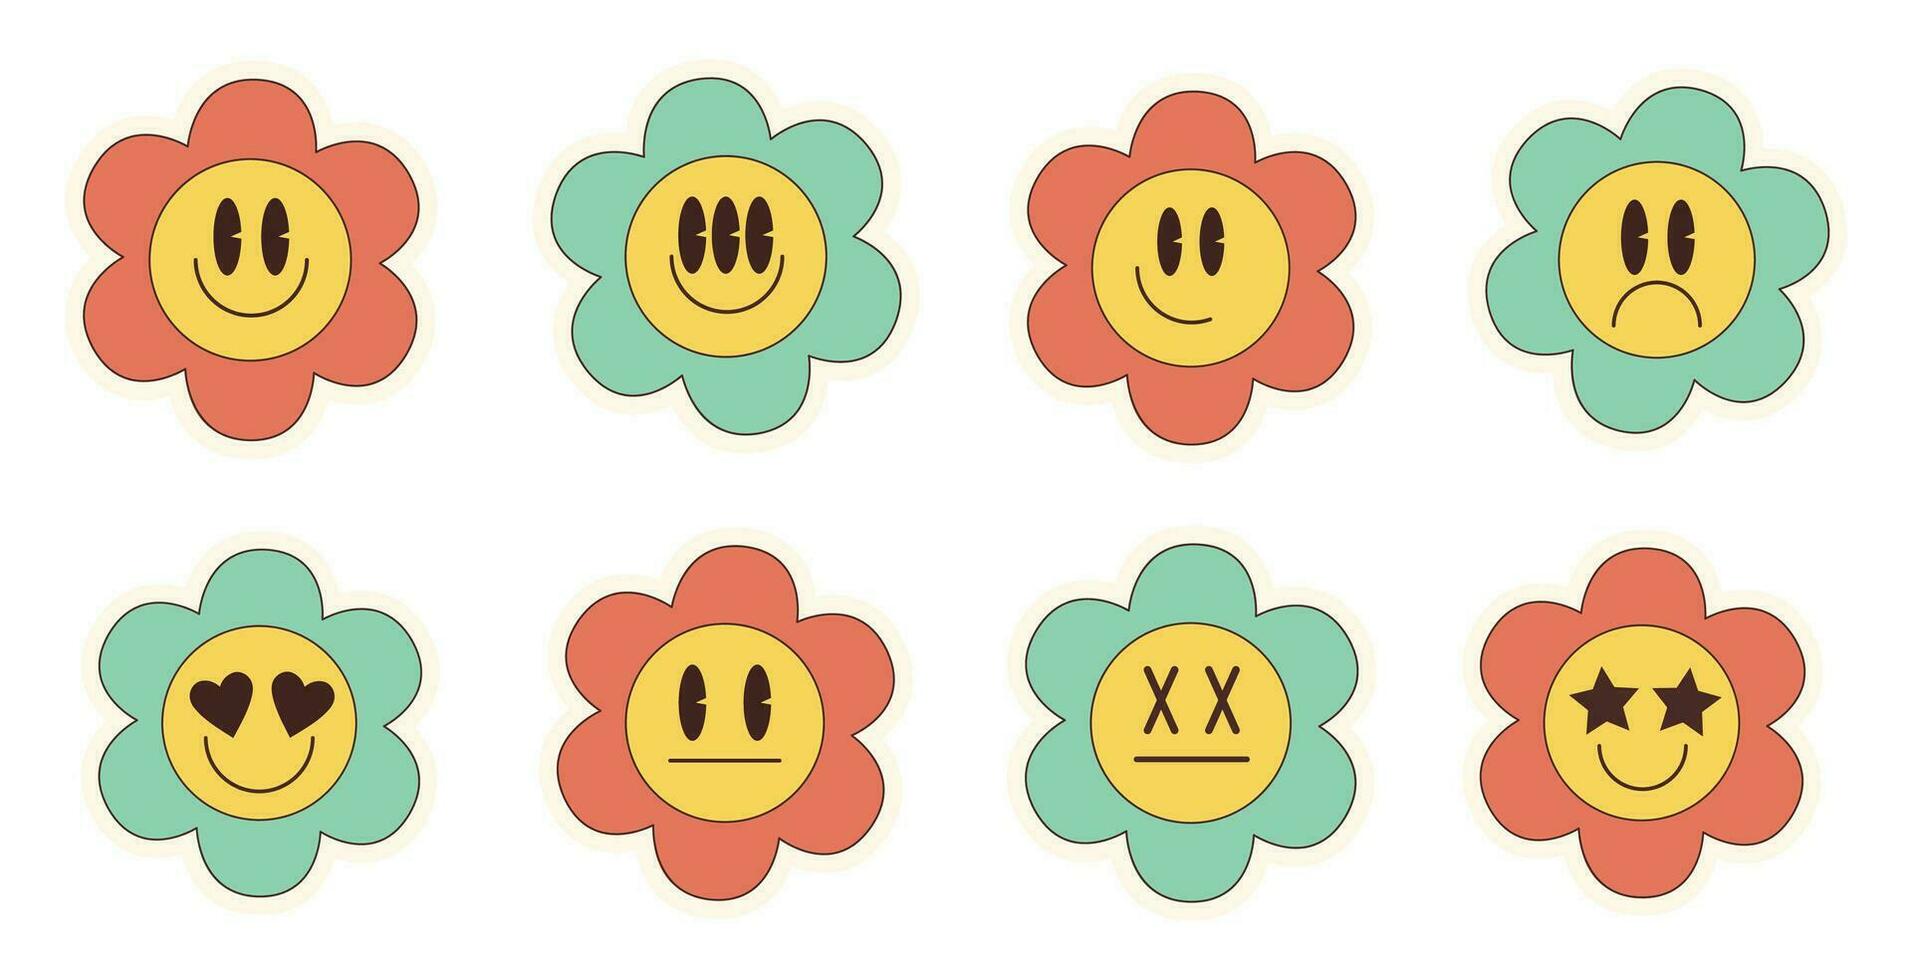 conjunto do groovy flor emoji dentro trippy estilo. feliz margarida com olhos e sorriso. vetor